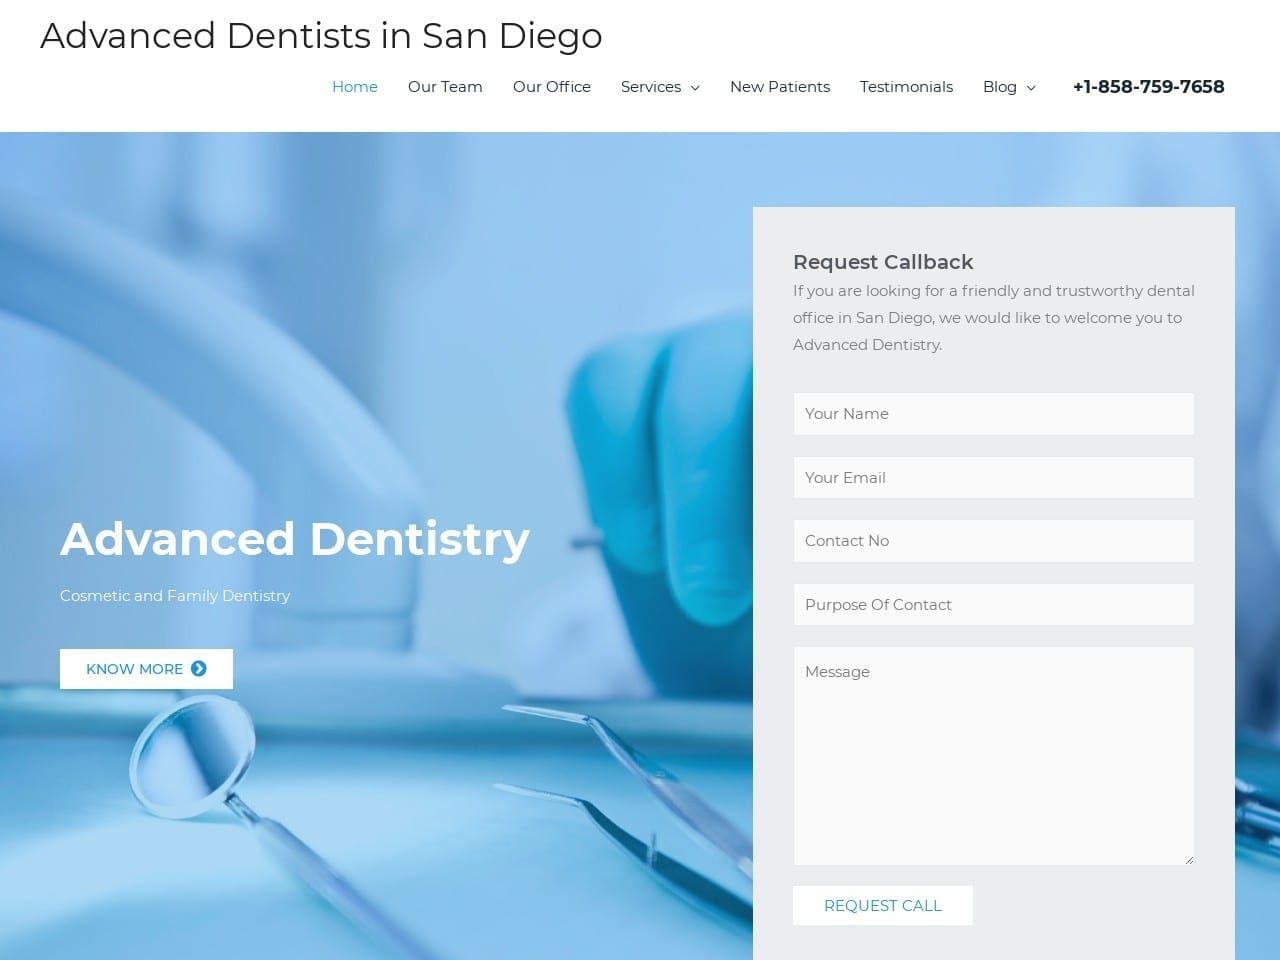 Advanced Dentist Website Screenshot from advanceddentistryofsandiego.com